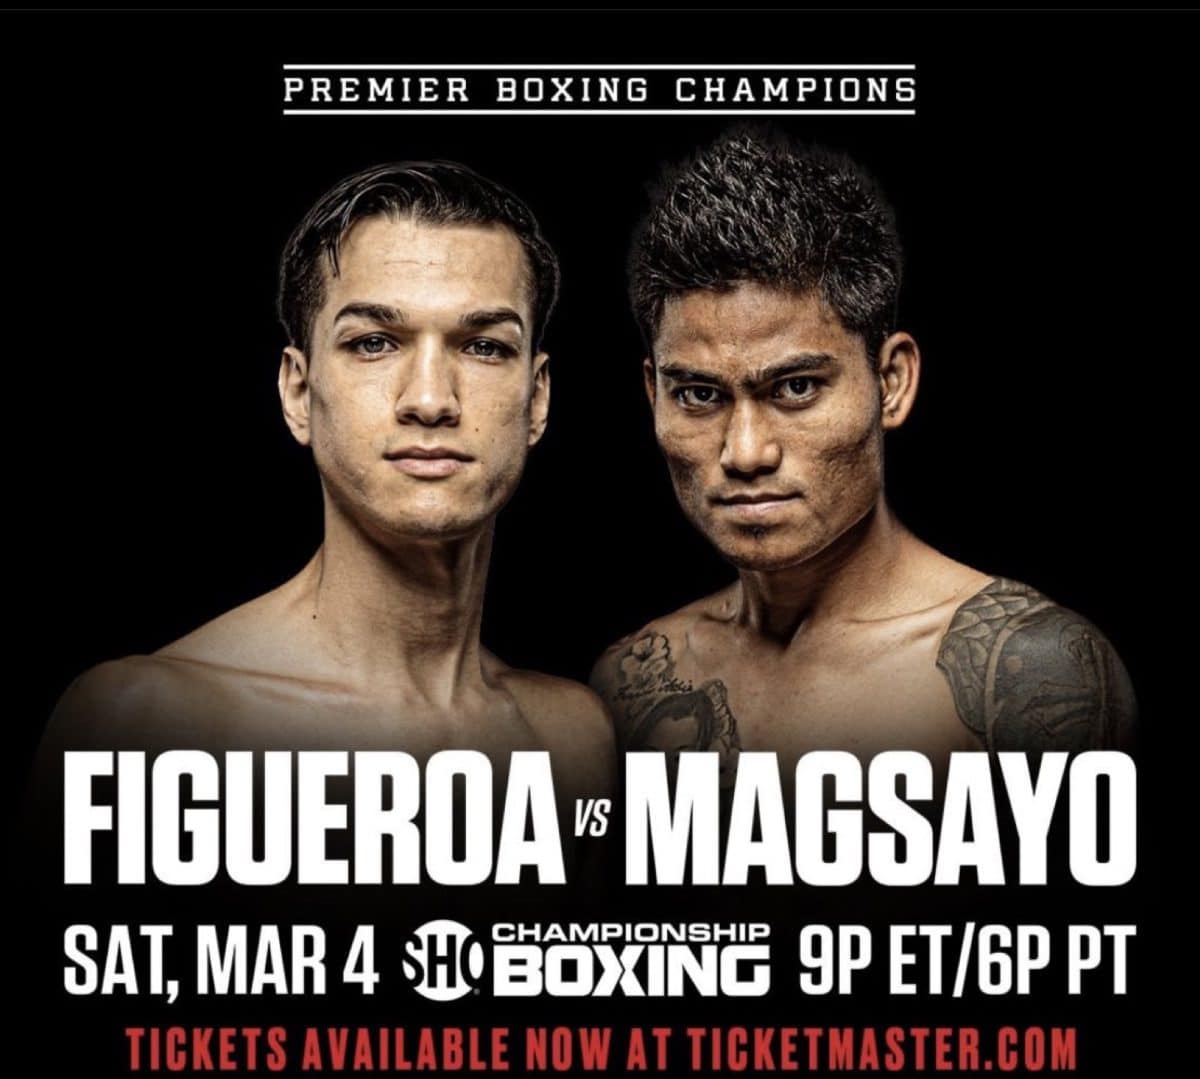 Image: Brandon Figueroa battles Mark Magsayo on March 4th on Showtime